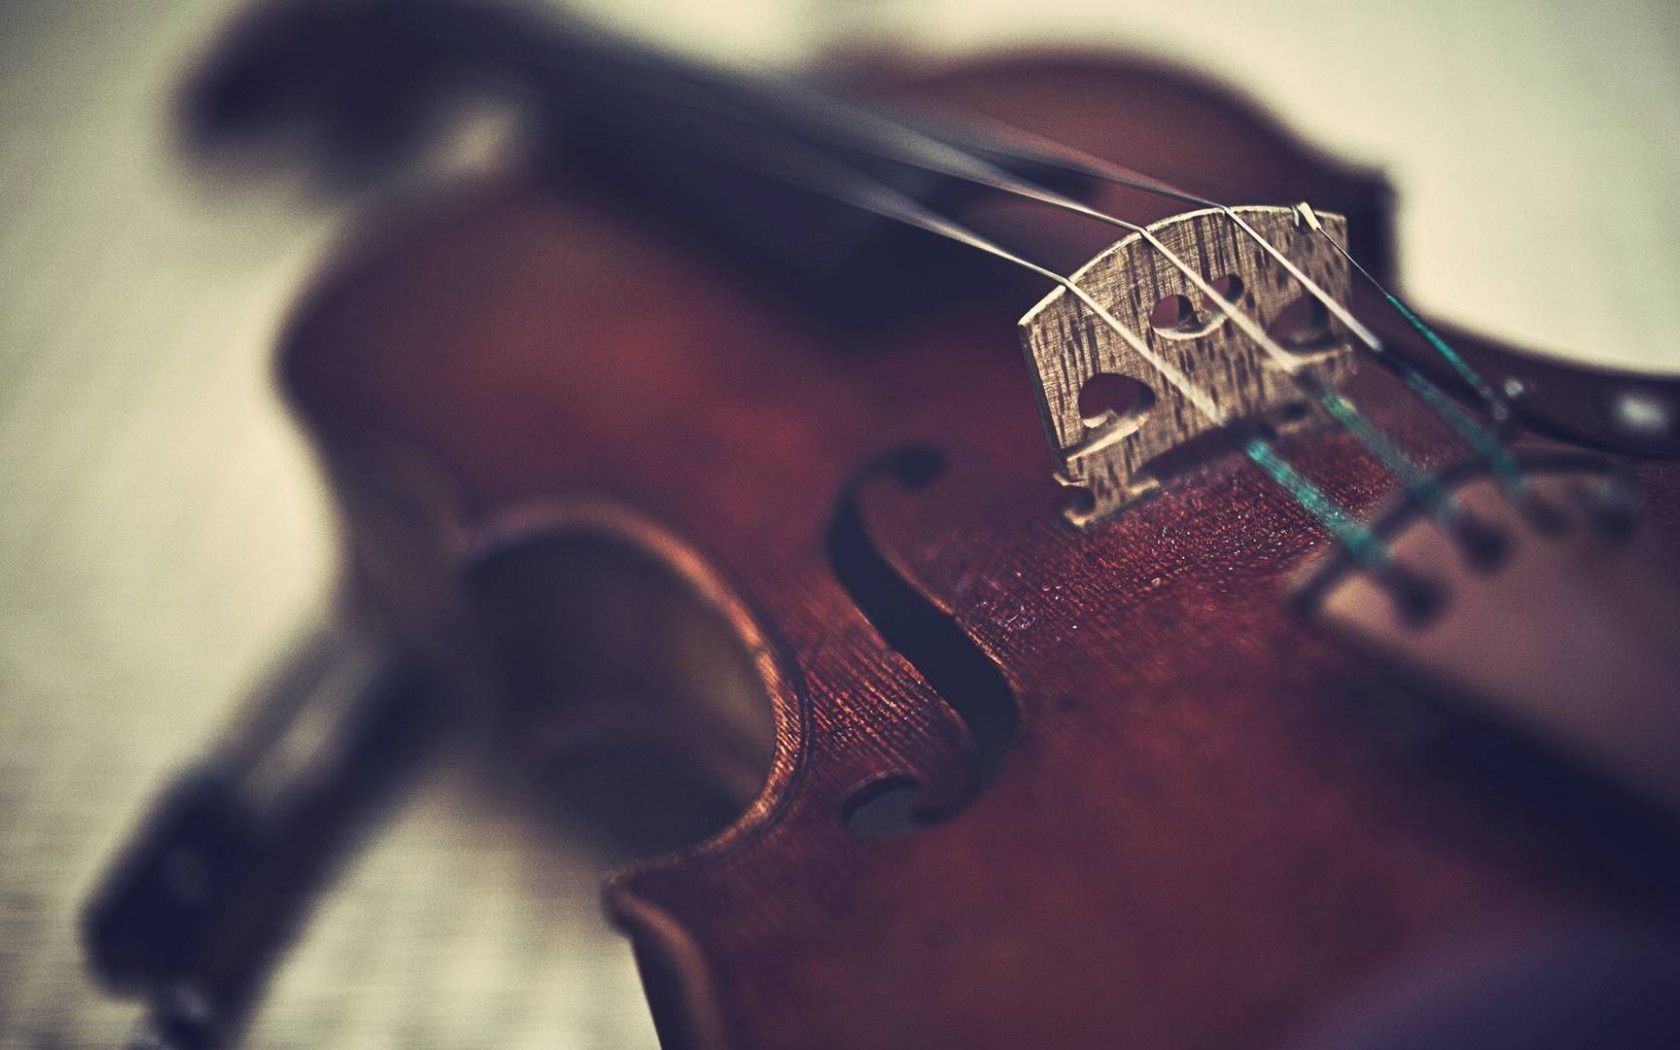 Violin Music Instrument. Violin music, Violin, Music instruments